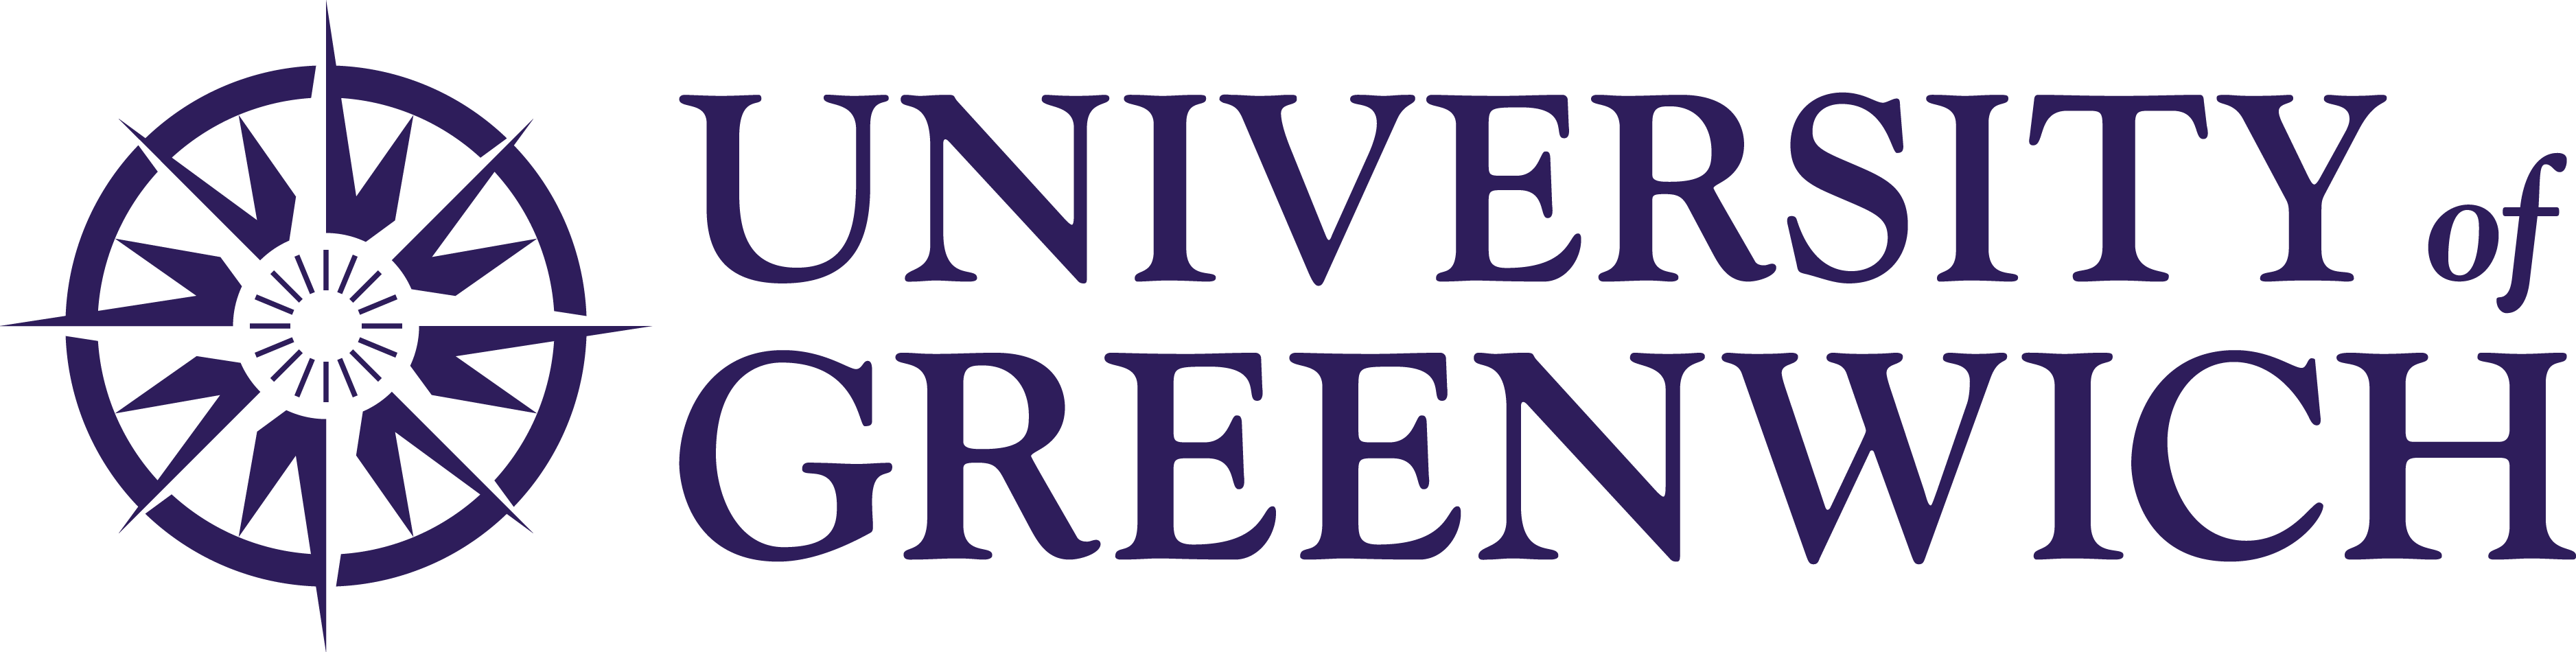 Logo for University of Greenwich